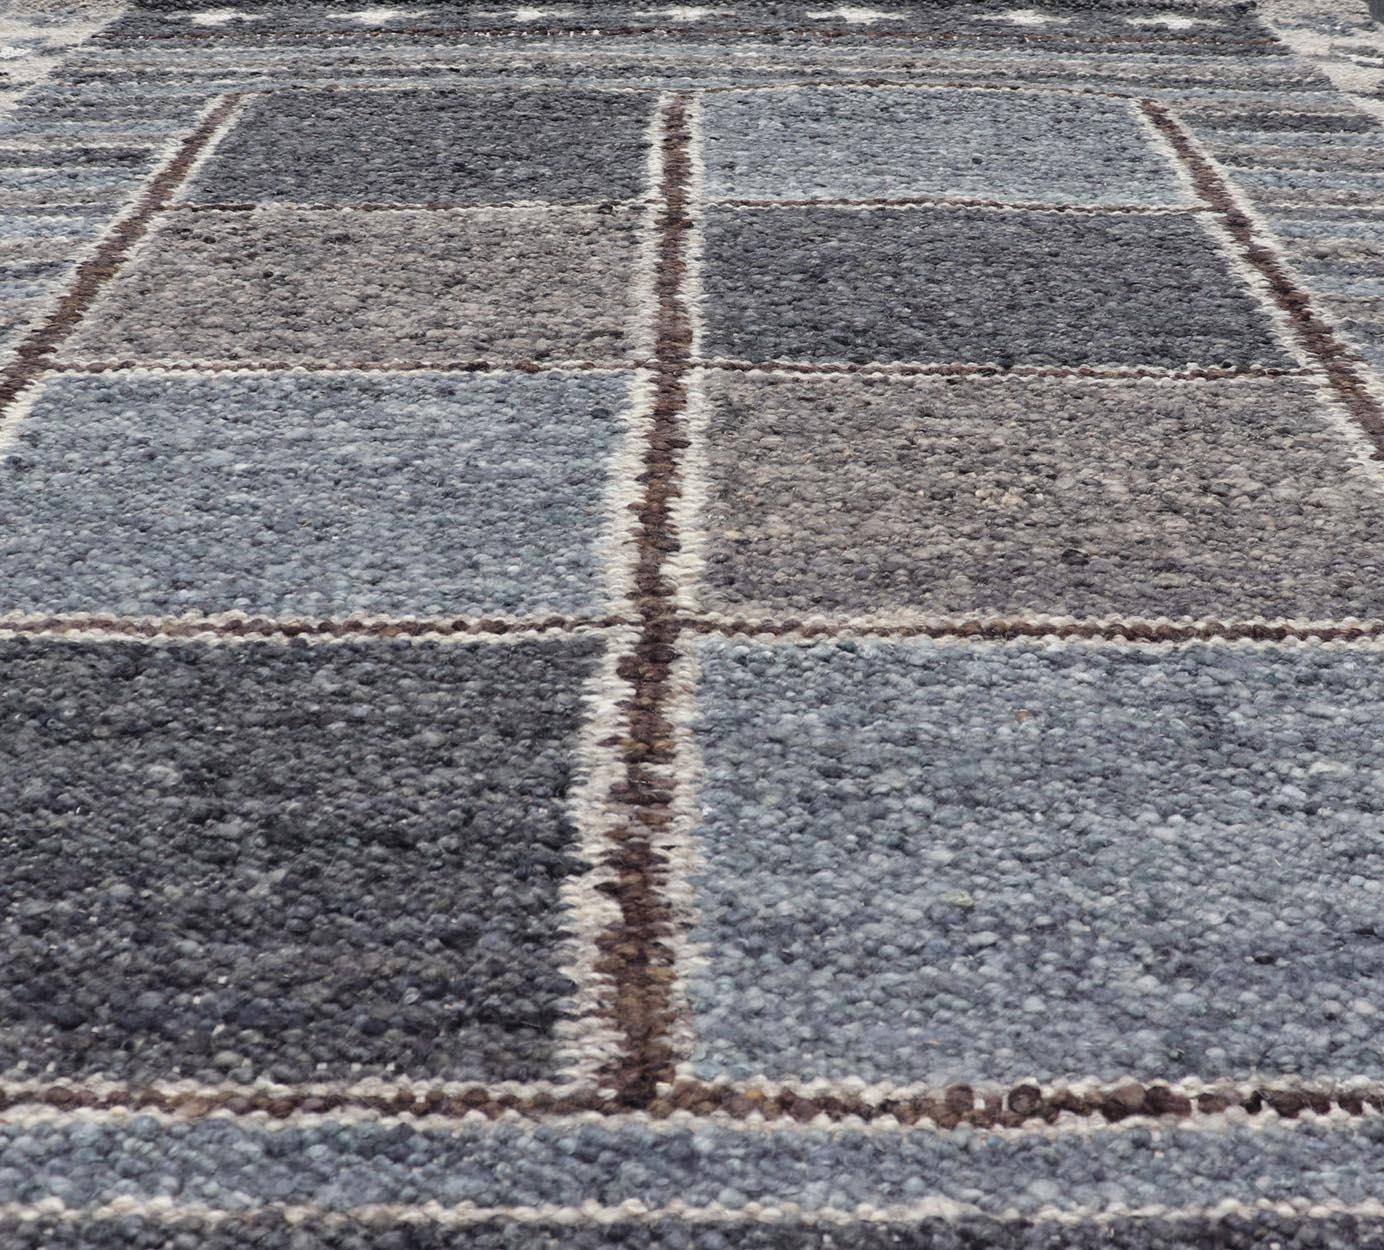 Modern Scandinavian/Swedish Design Rug in Blue, Charcoal, Gray and Cream. Keivan Woven Arts / rug RJK-26358-SHB-004-NU, country of origin / type: India / Scandinavian flatweave rug. 
Measures: 5'3 x 6'10 
This Scandinavian flat weave rug is inspired